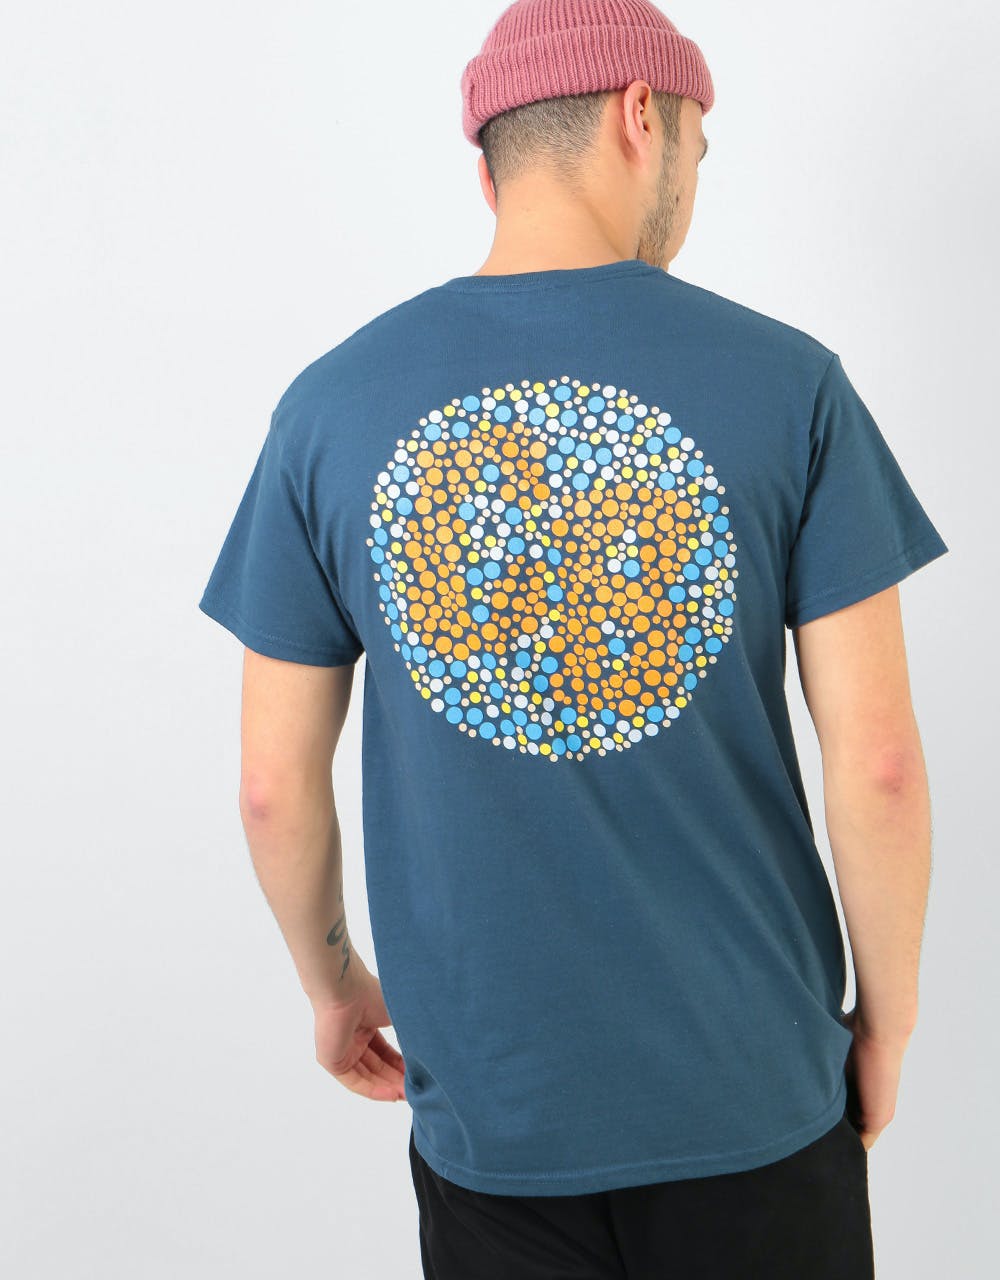 Colourblind Ishihara T-Shirt - Blue Dusk